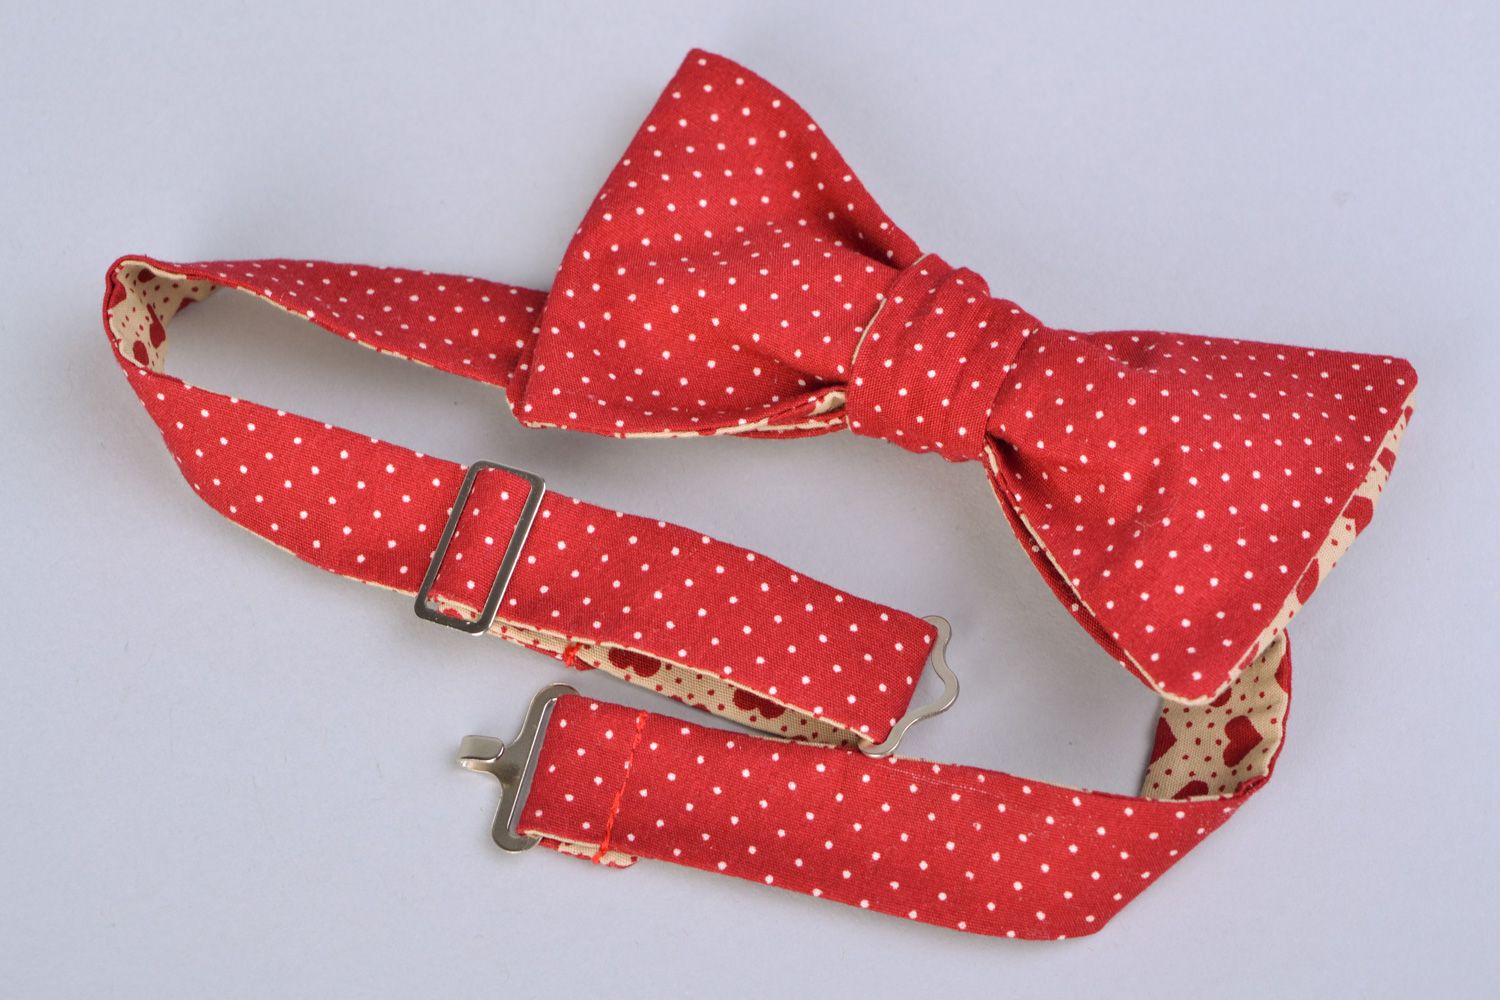 Homemade fabric bow tie photo 4